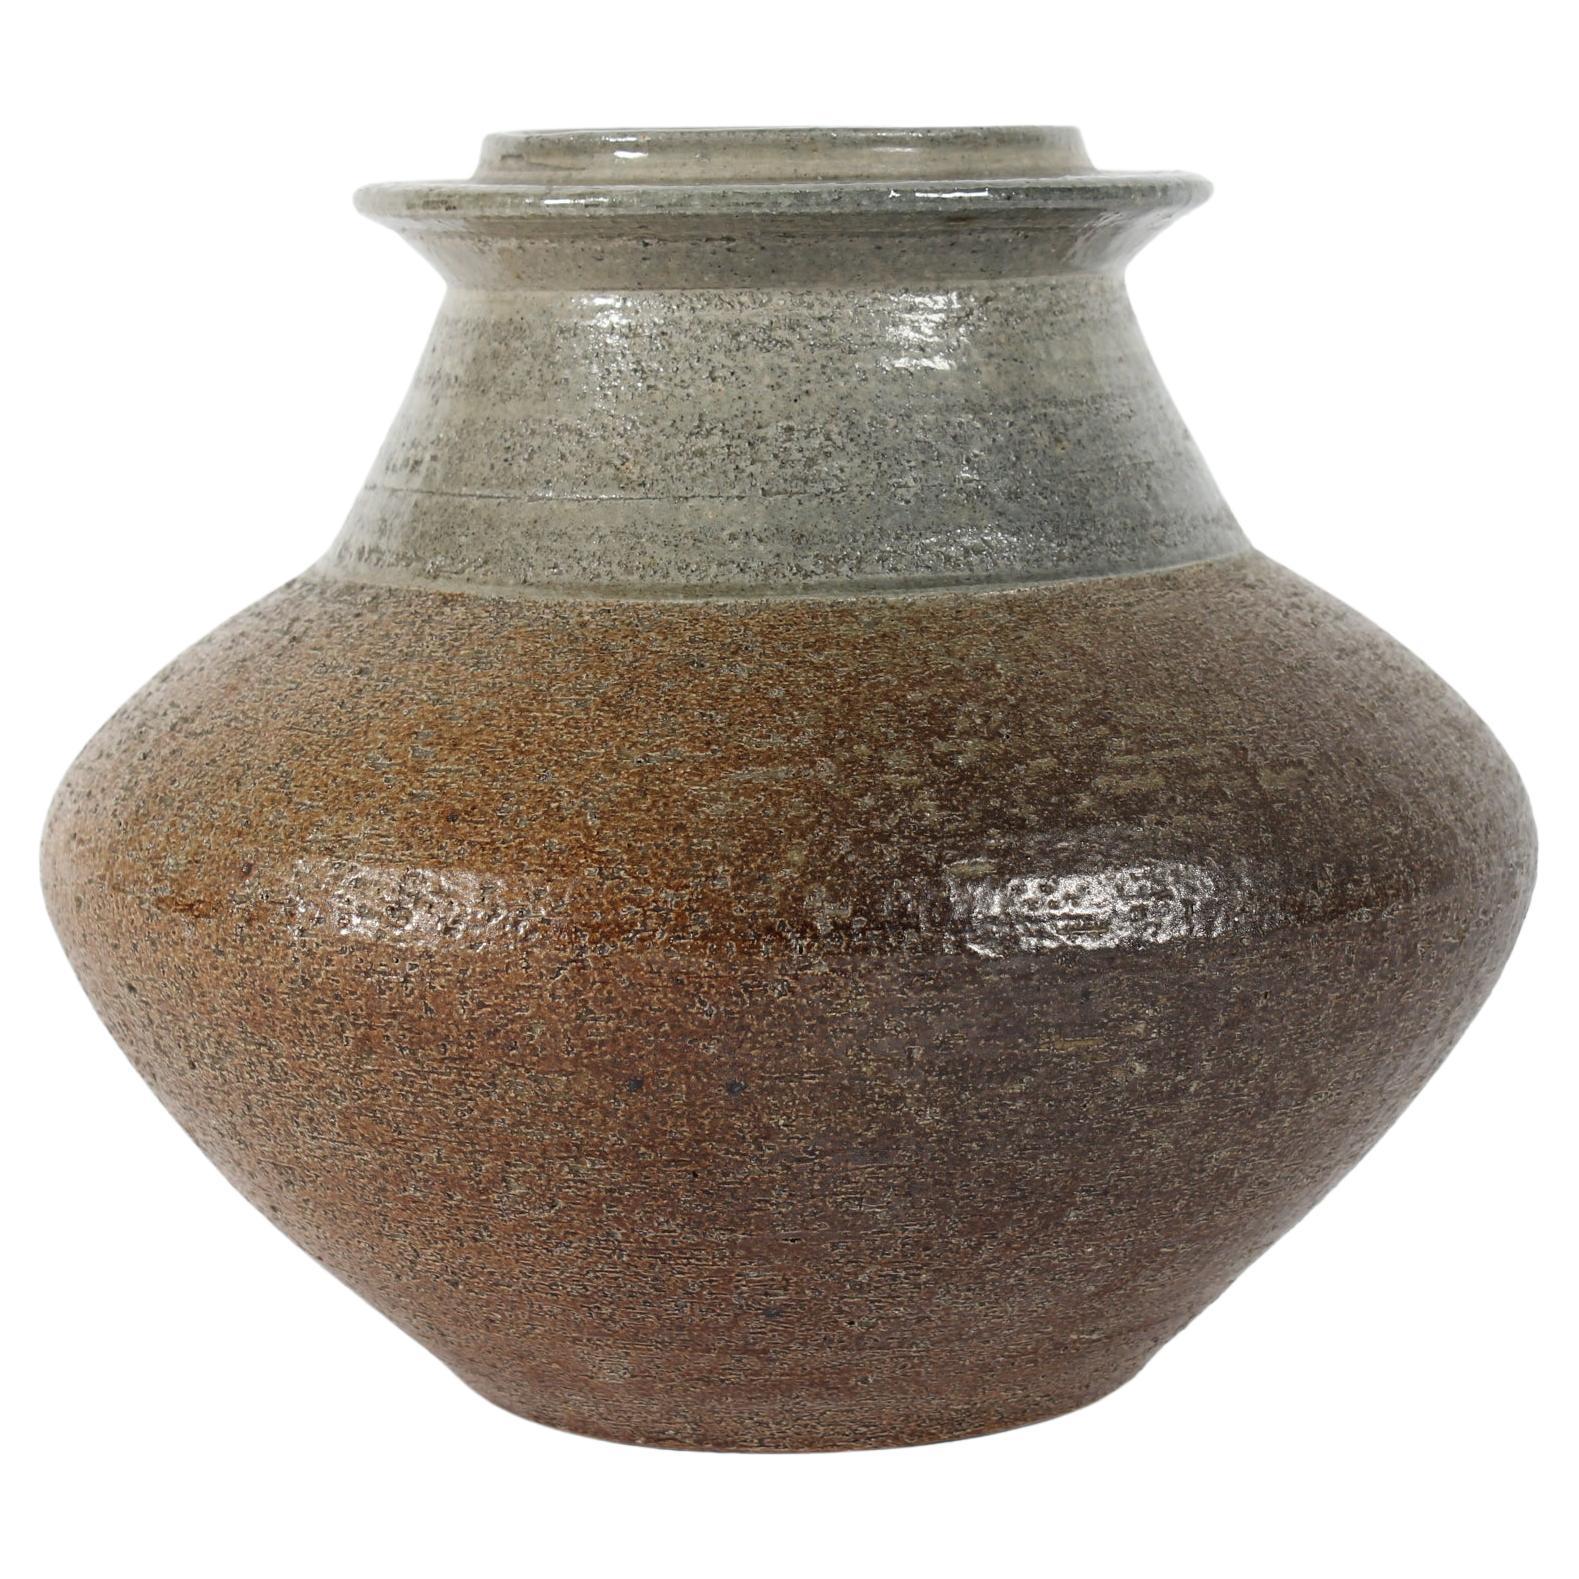 Danish Nils Kähler for HAK Kähler Large Wide Vase with Greyish-brown Glaze 1970s For Sale